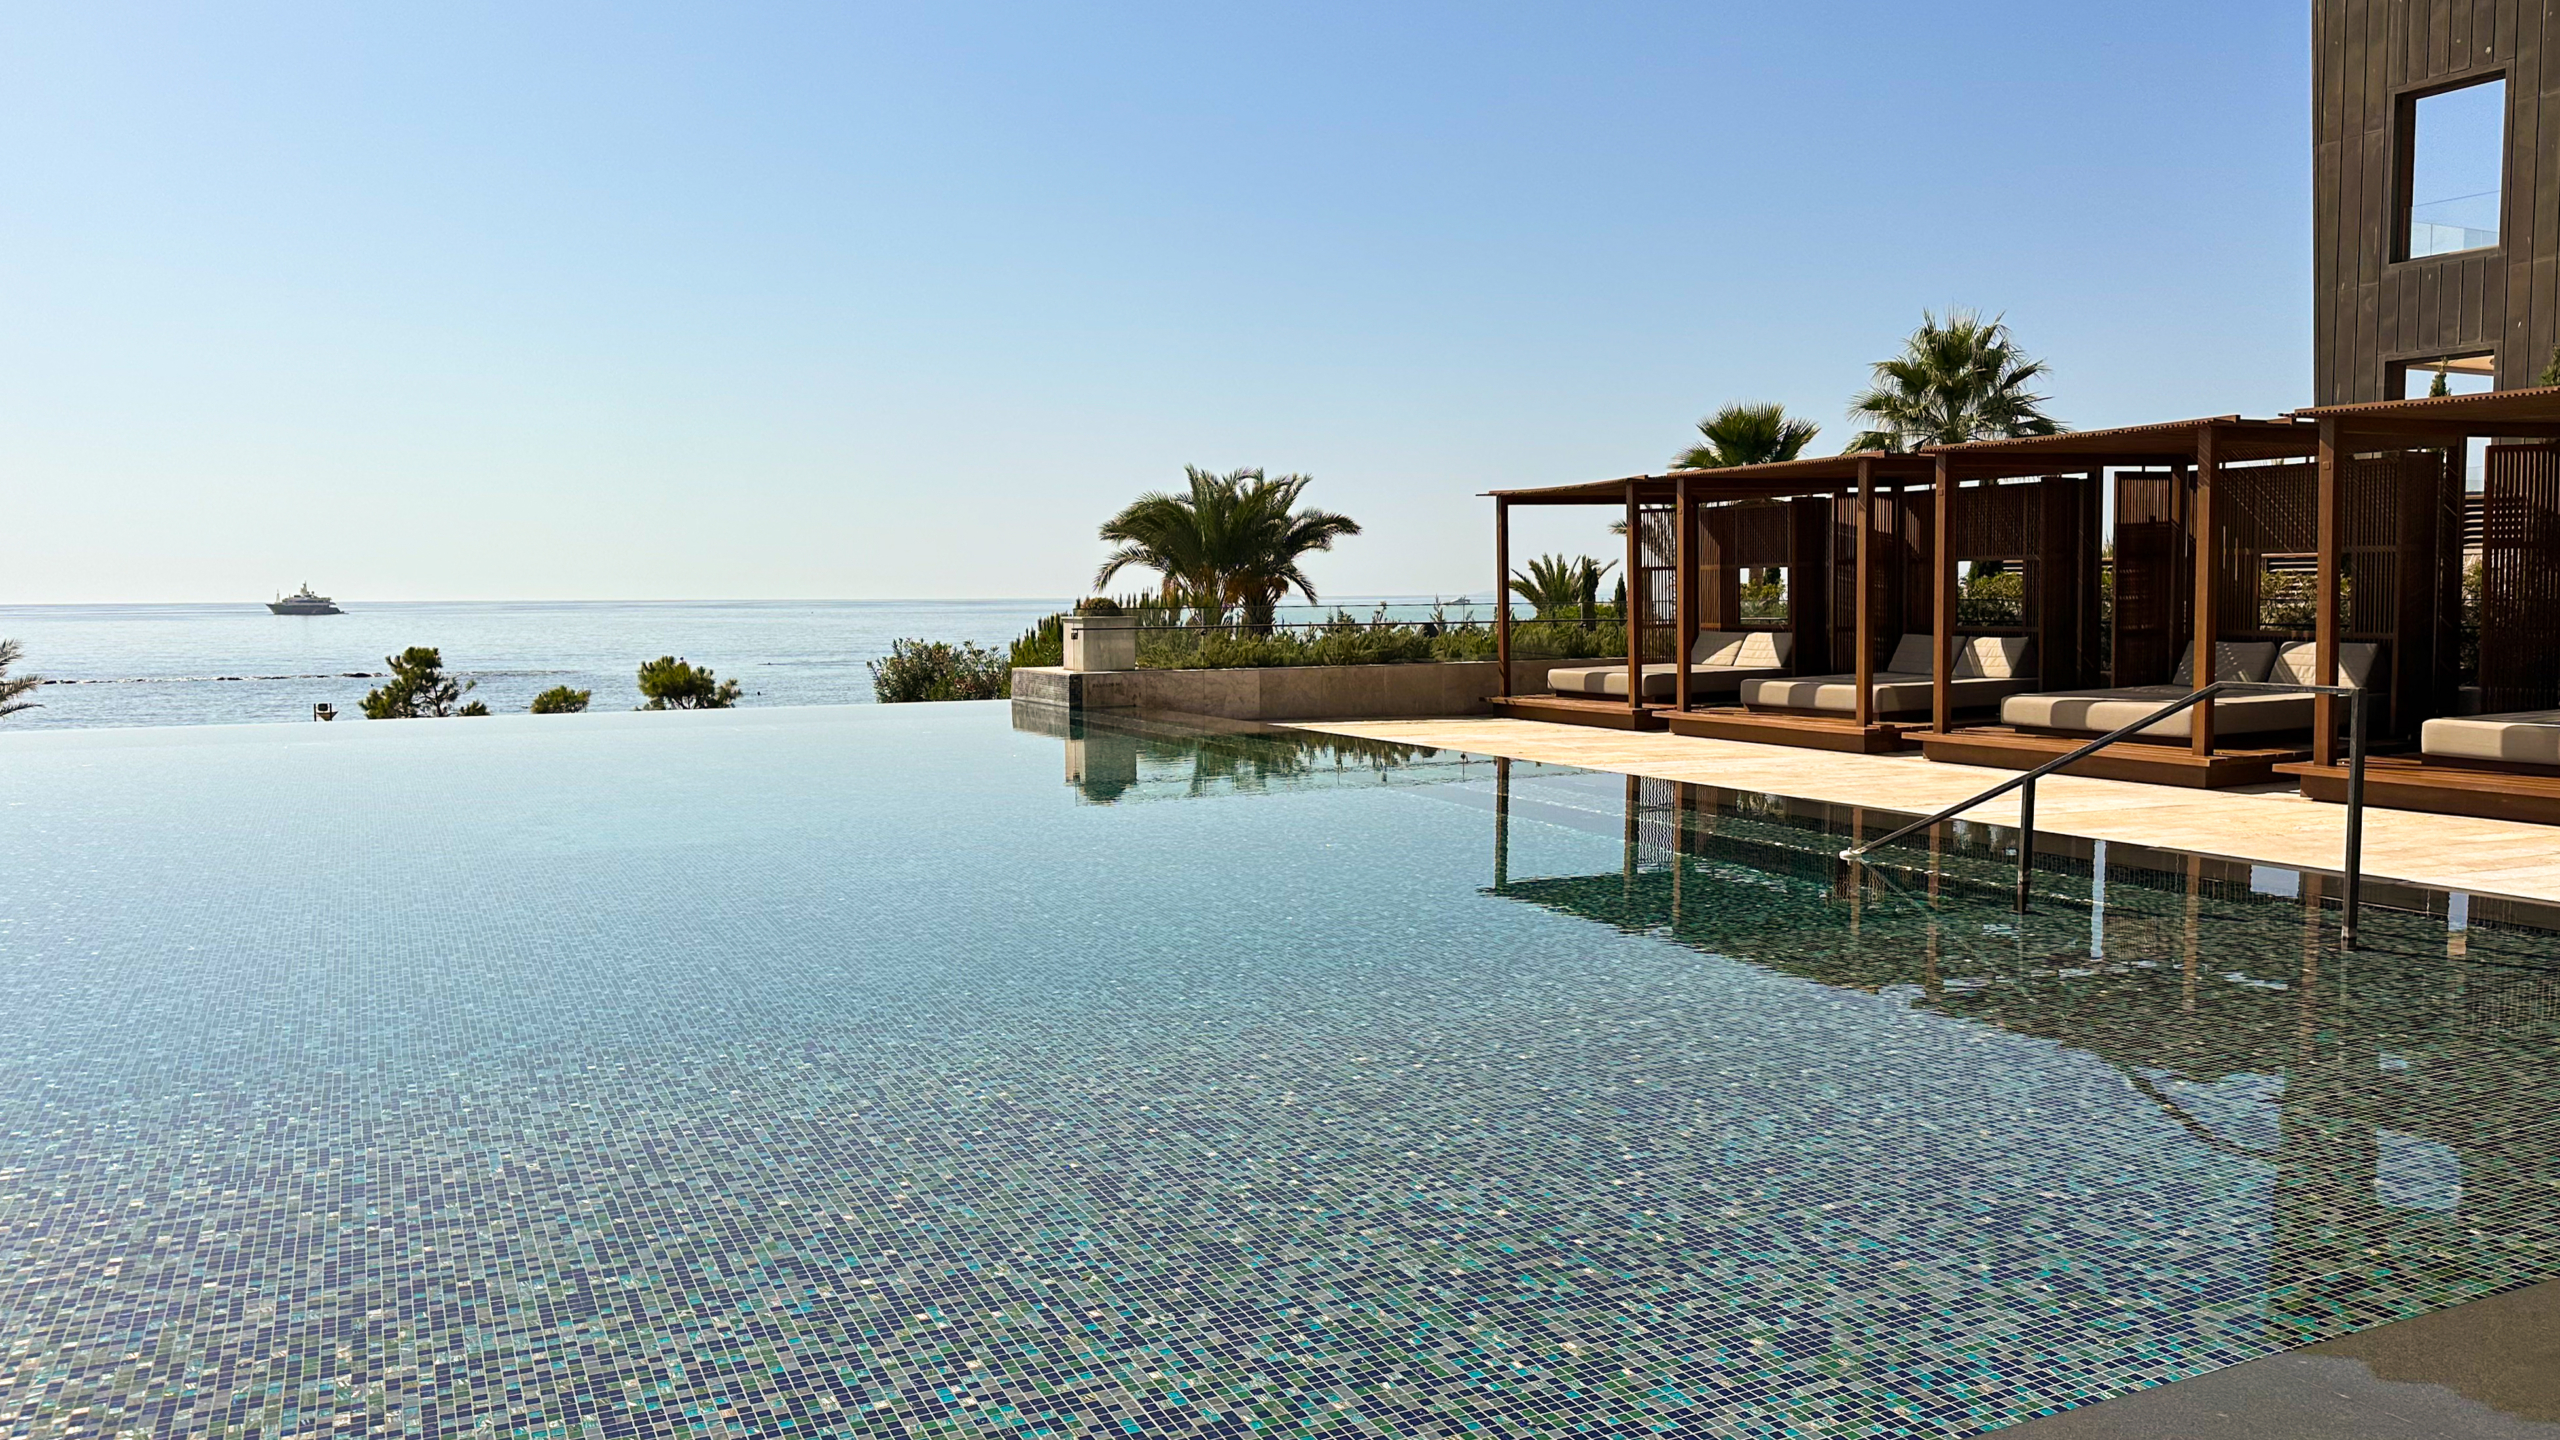 amara hotel cipro - piscina a sfioro